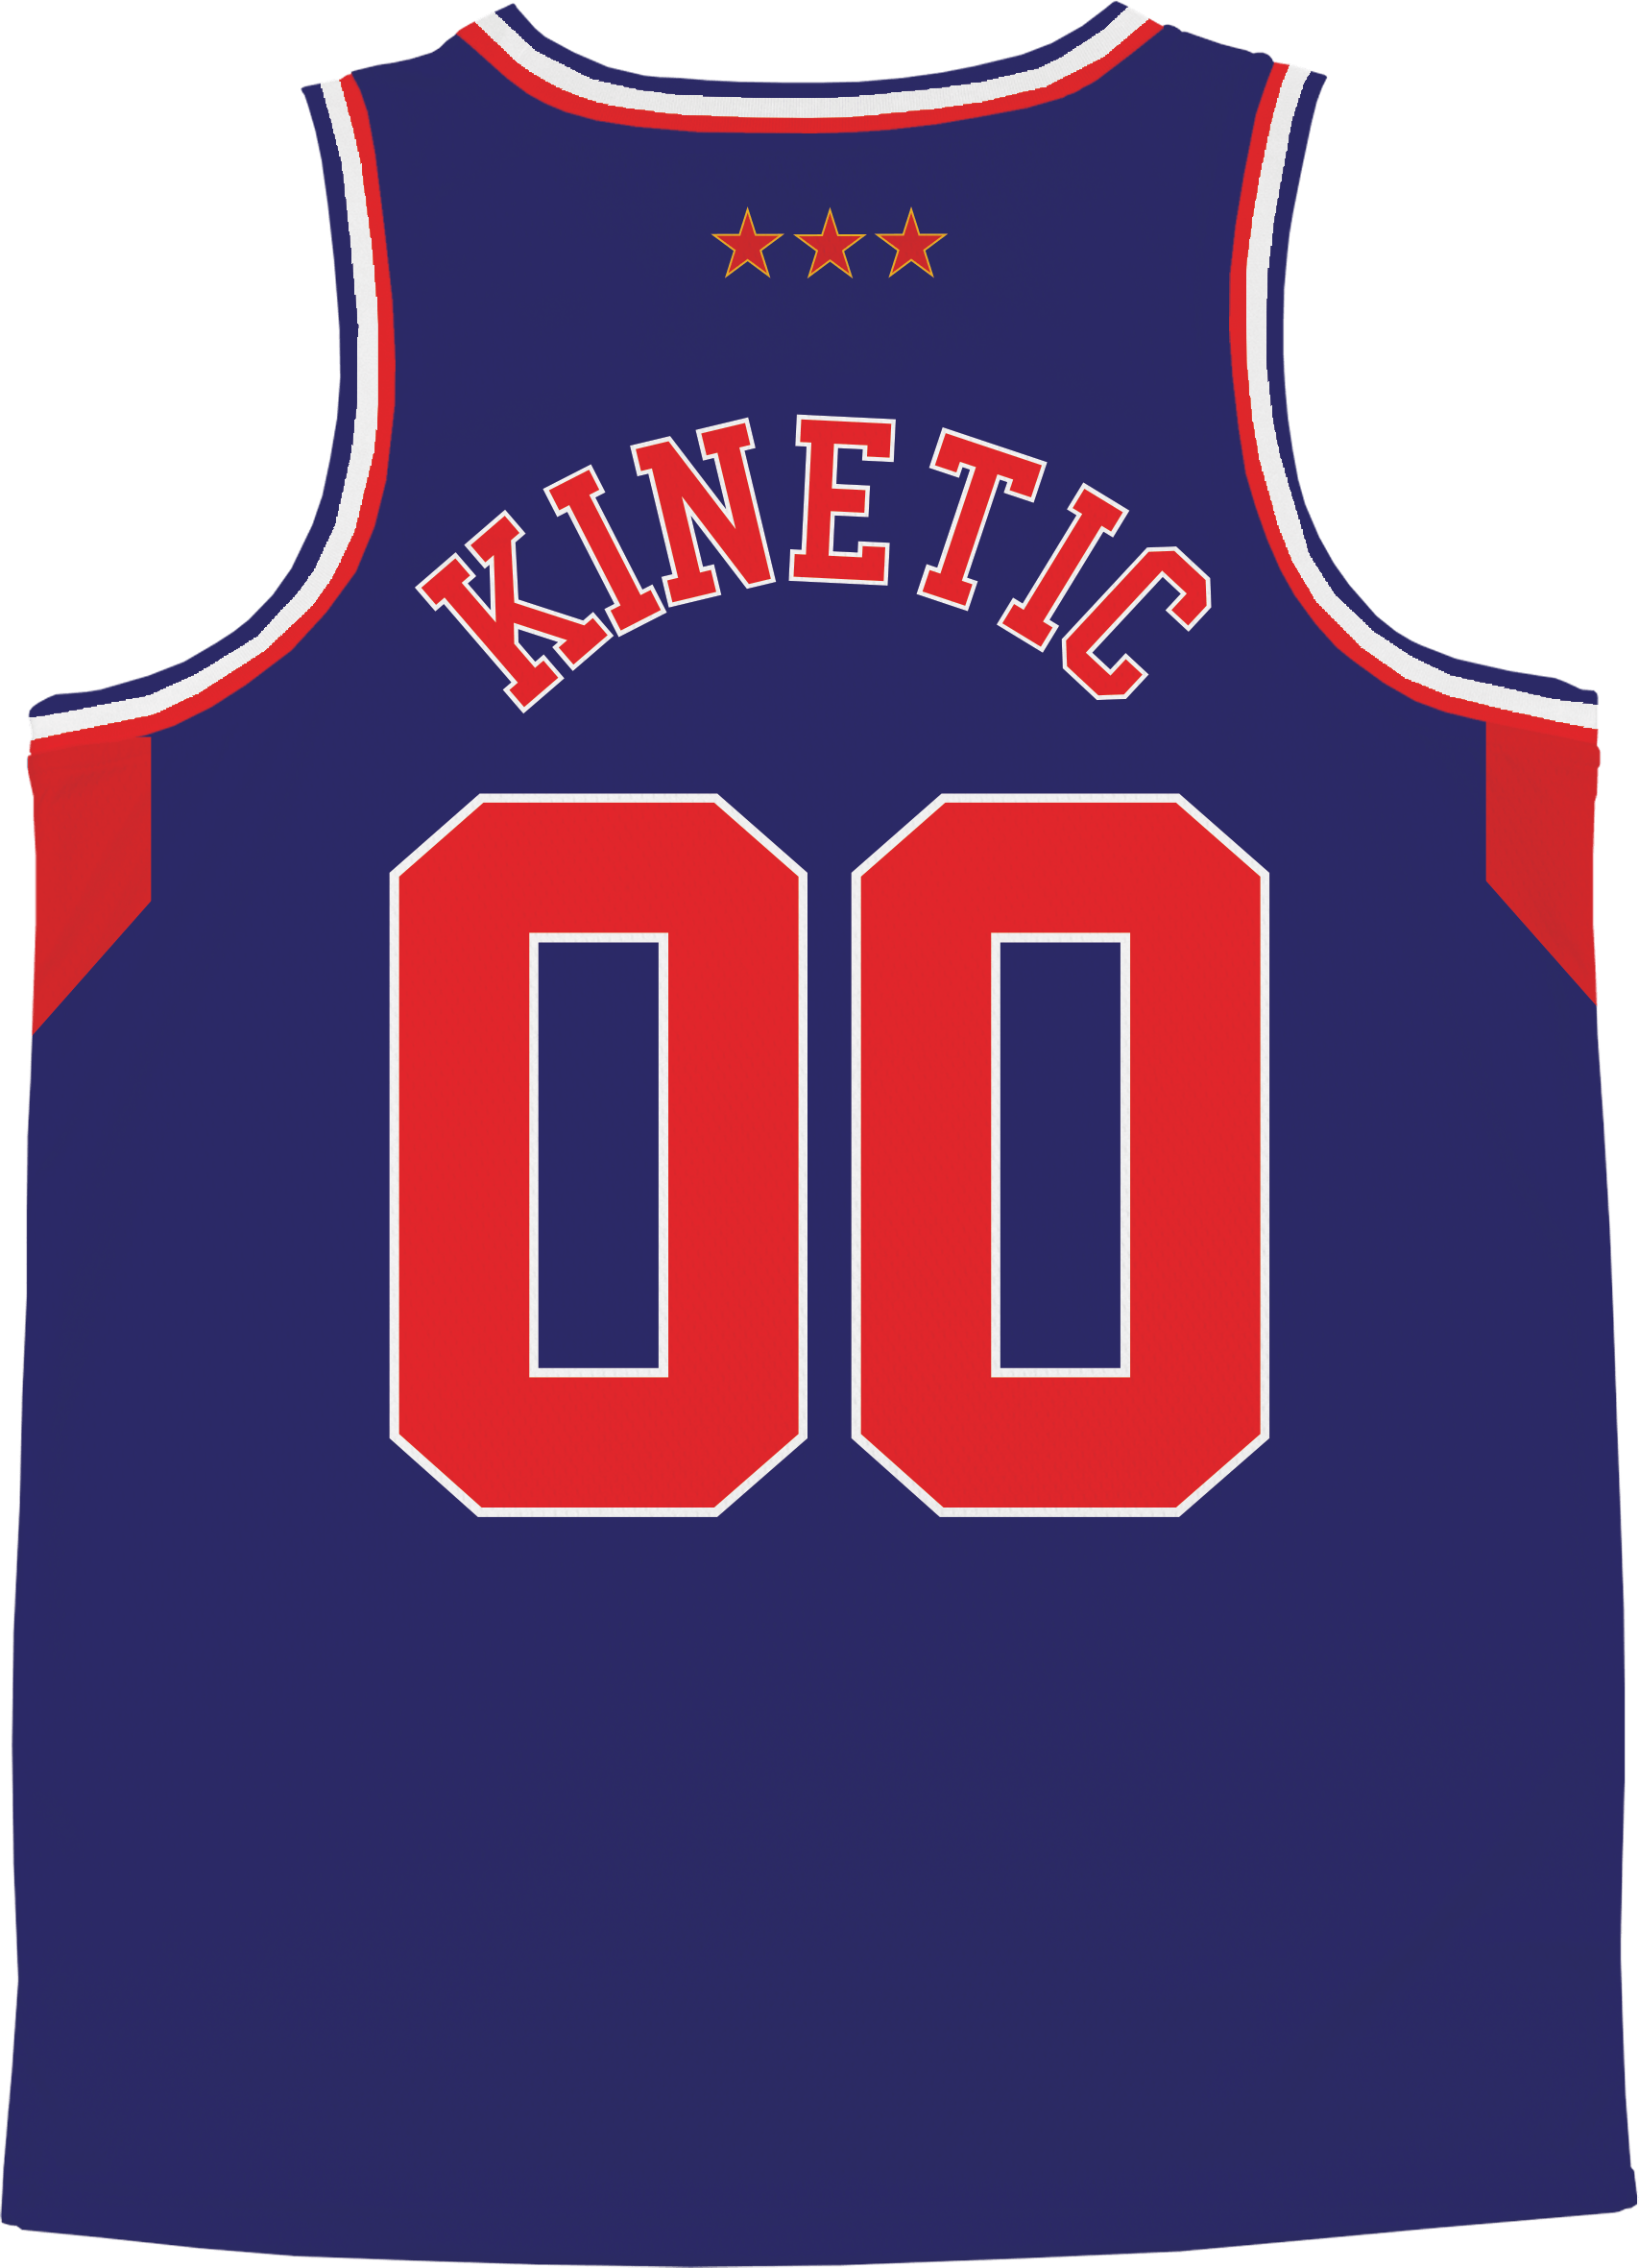 Alpha Gamma Rho - Retro Ballers Basketball Jersey - Kinetic Society